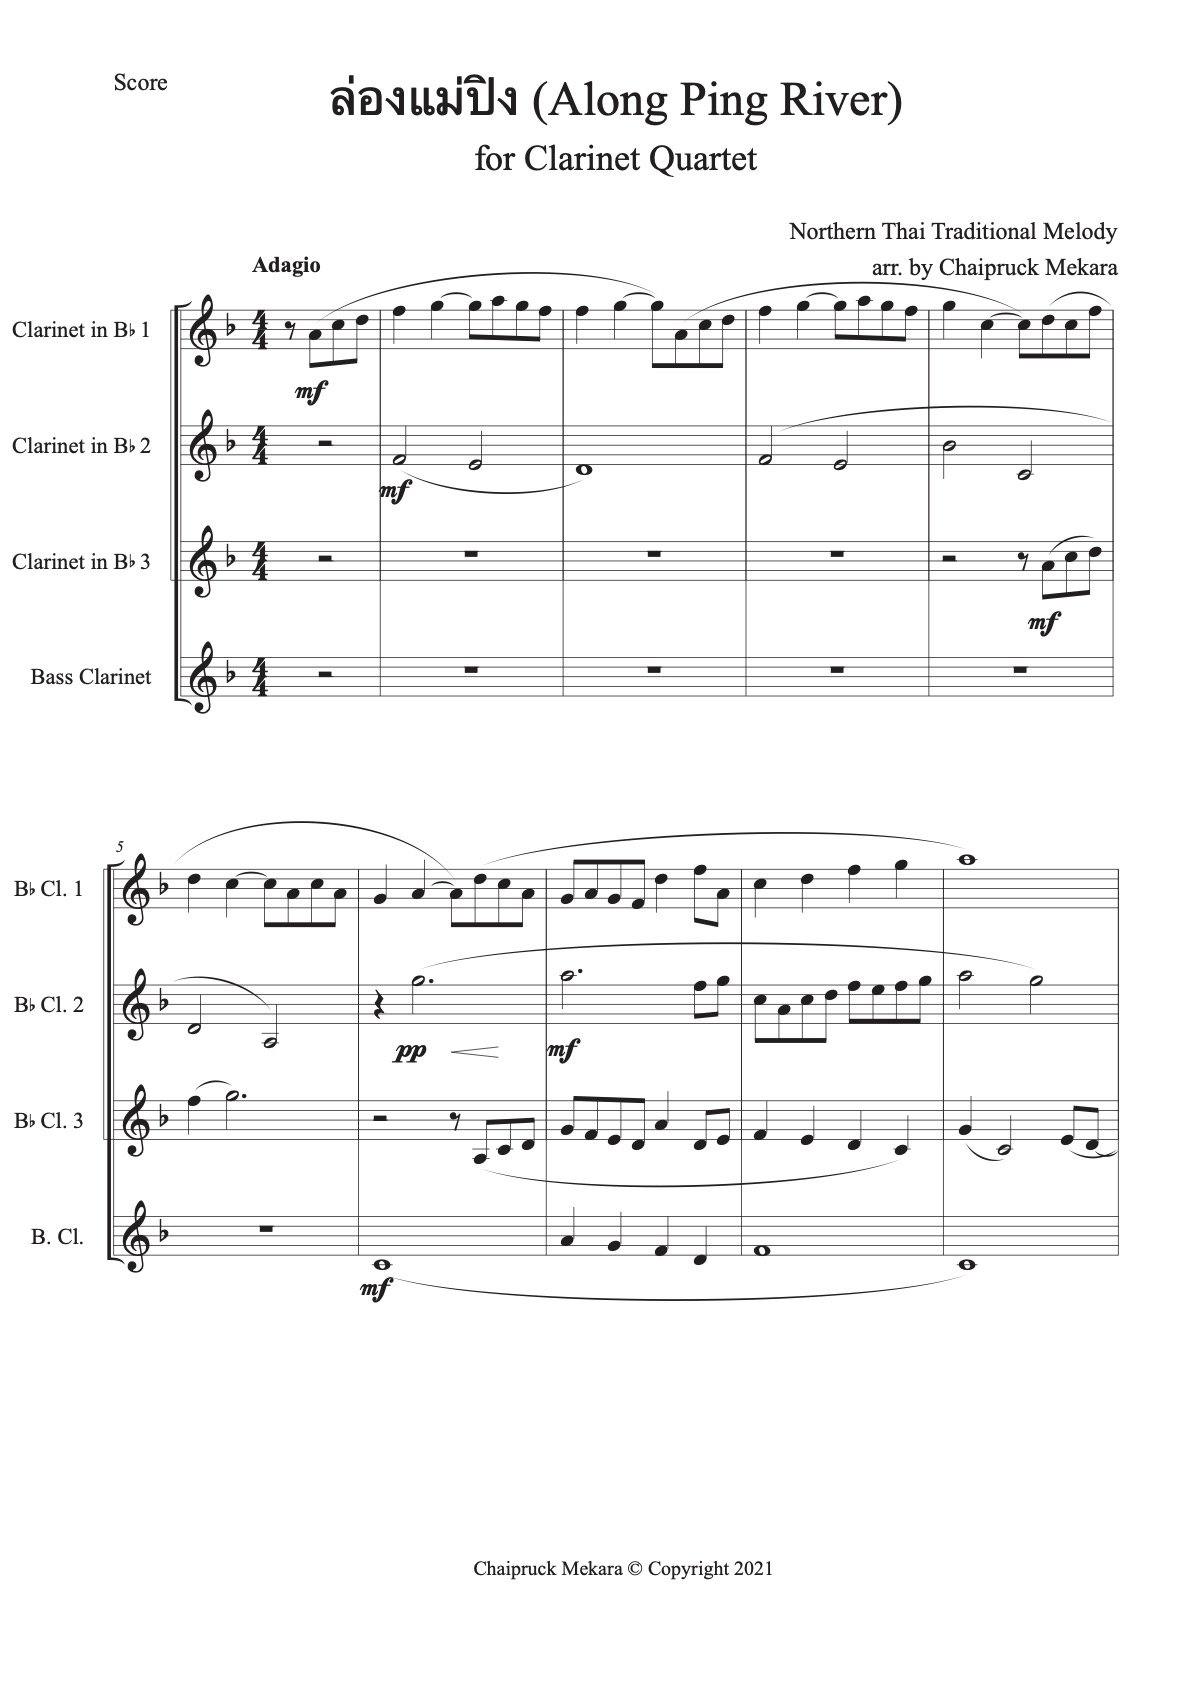 Along Ping River (ล่องแม่ปิง) Clarinet Quartet sheet music - ChaipruckMekara